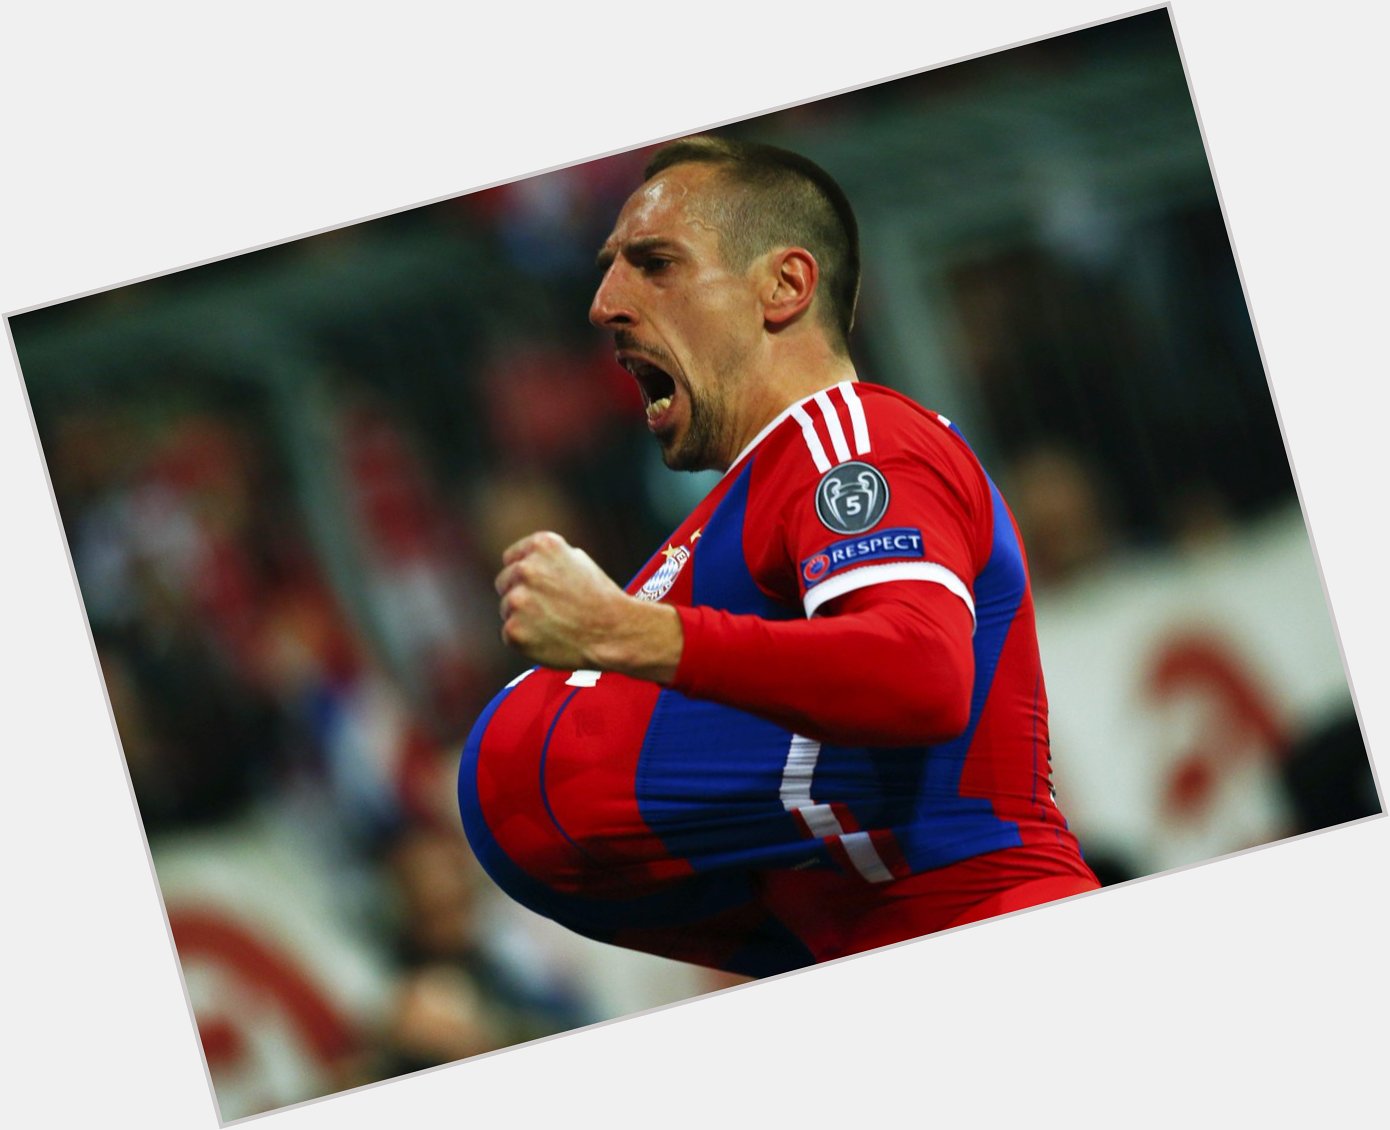 Happy 32nd birthday to Franck Ribéry. He\s won 4 Bundesliga titles, 4 DFB-Pokals and 1 Champions League at Bayern. 